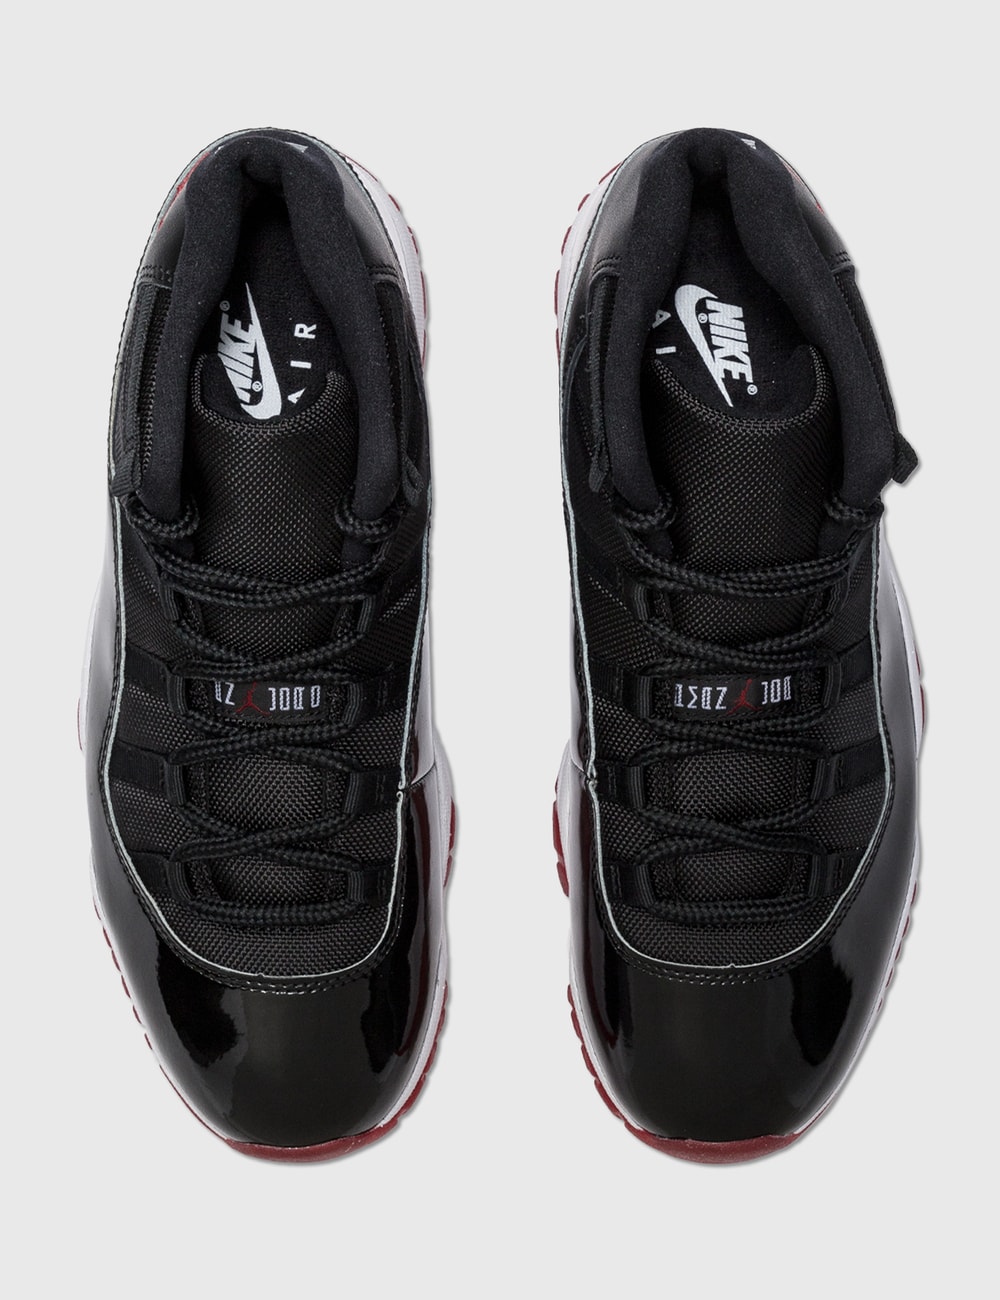 Nike Air Jordan 11 Retro 2019 | HBX Archives